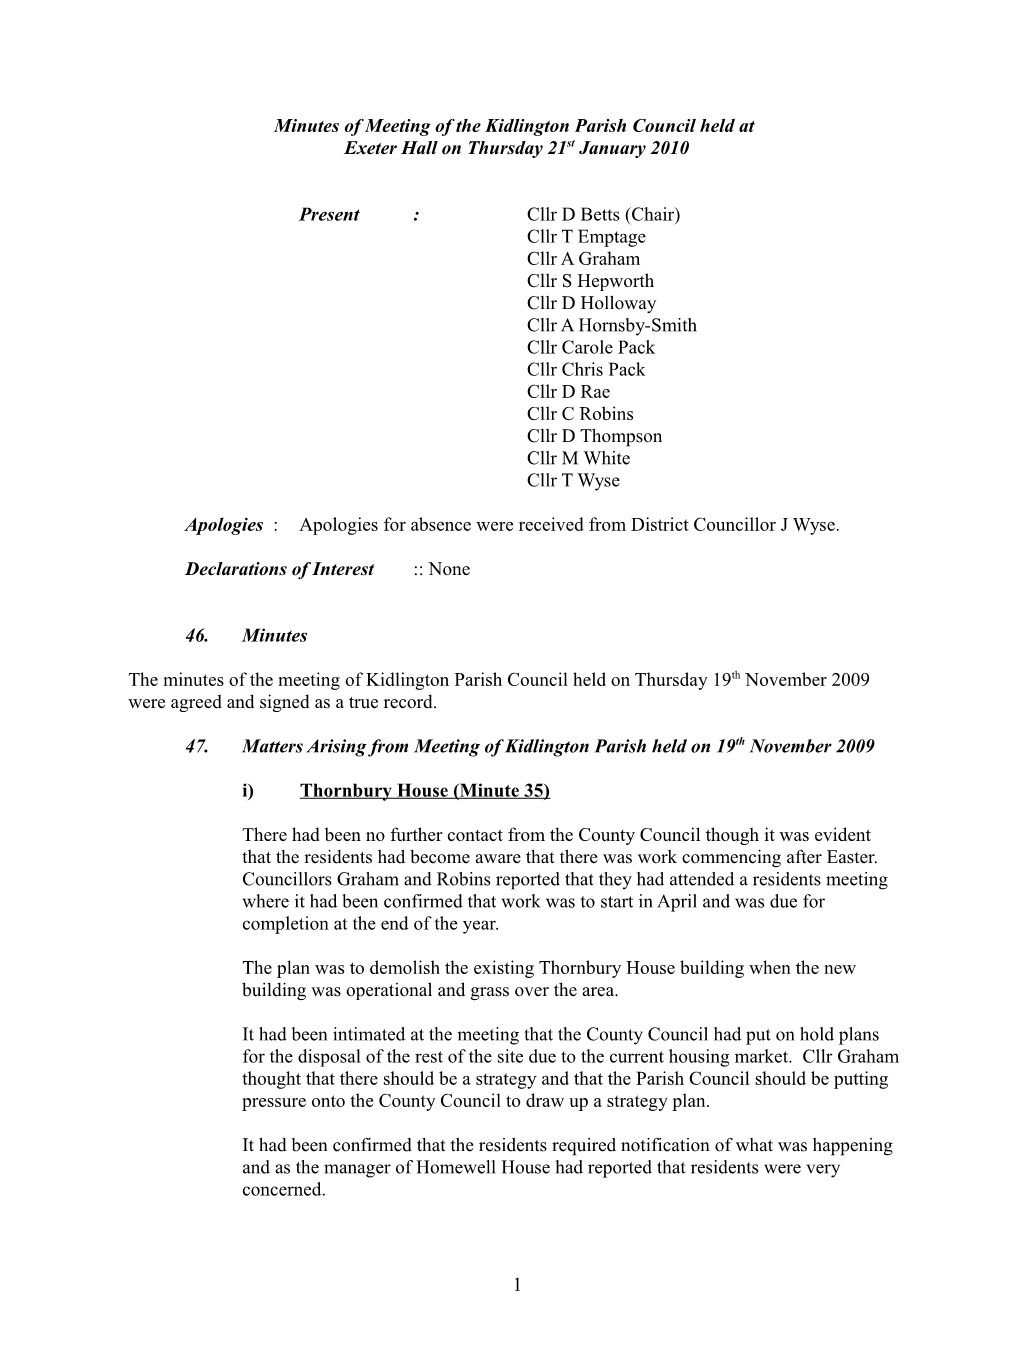 Minutes of Meeting of Kidlington Parish Council